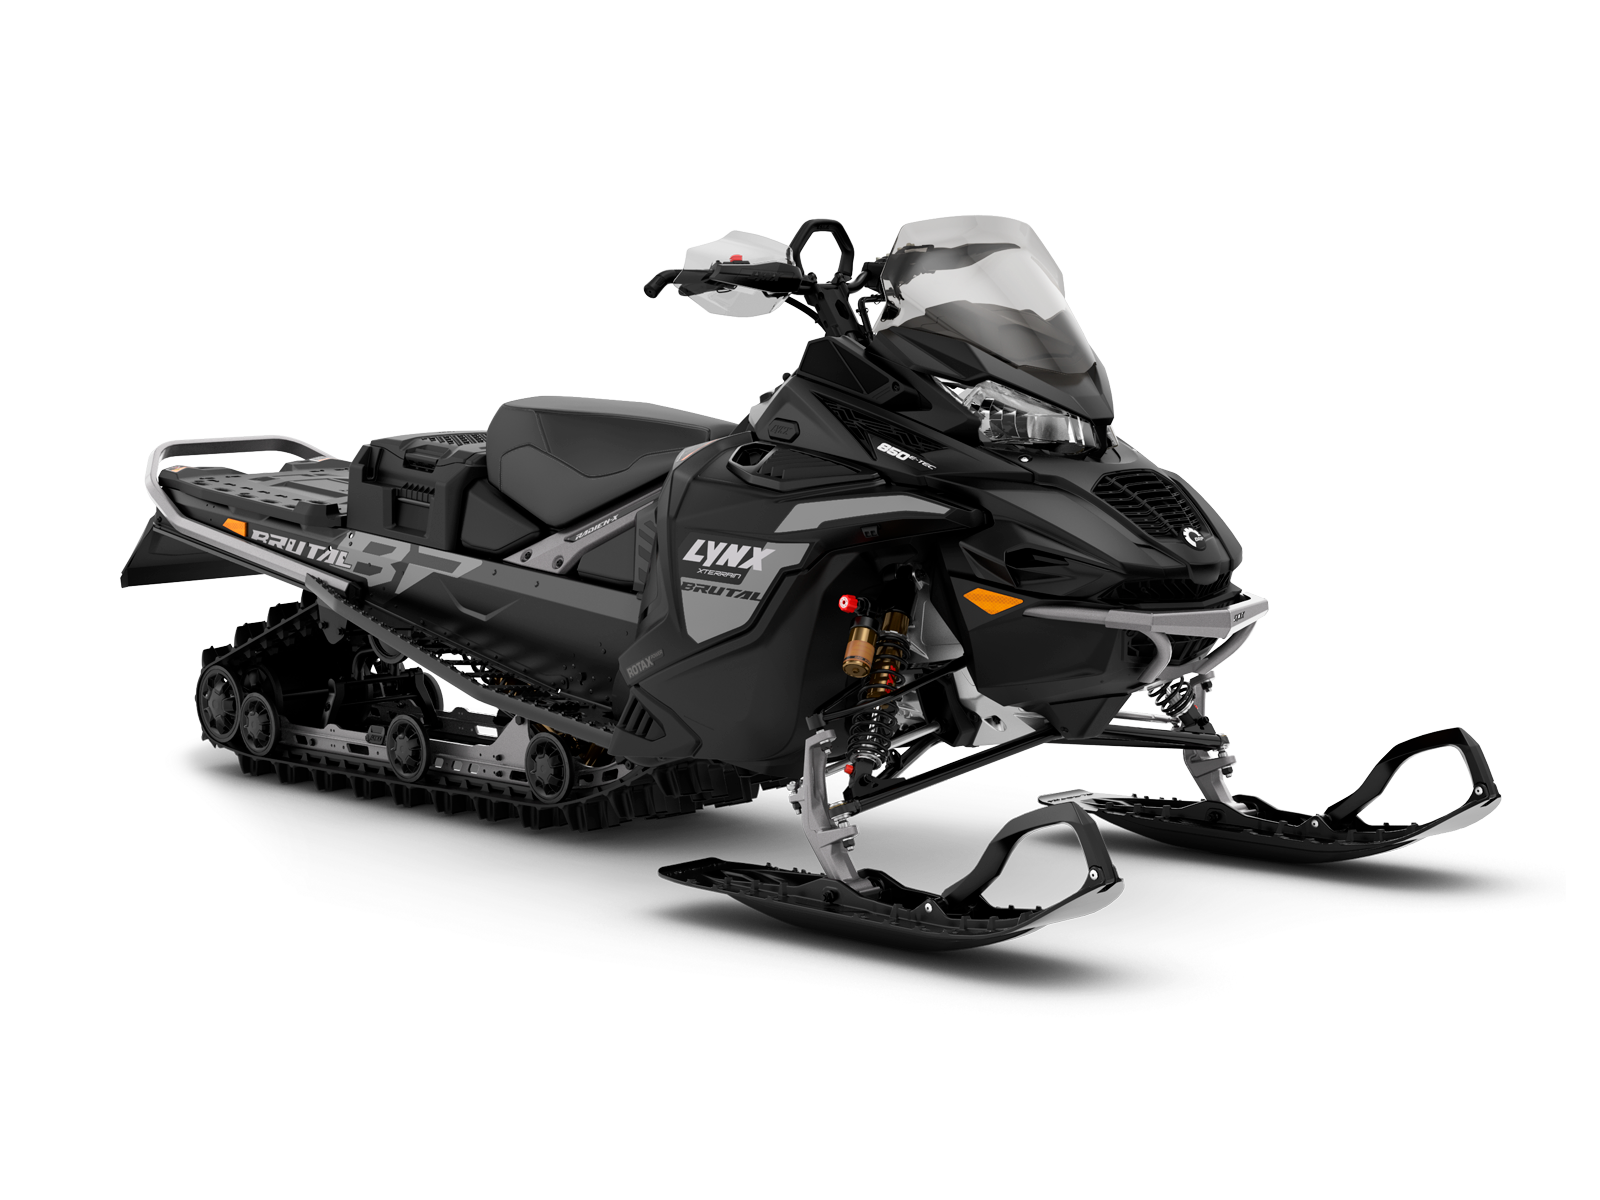 Lynx Xterrain RE Turbo snowmobile 